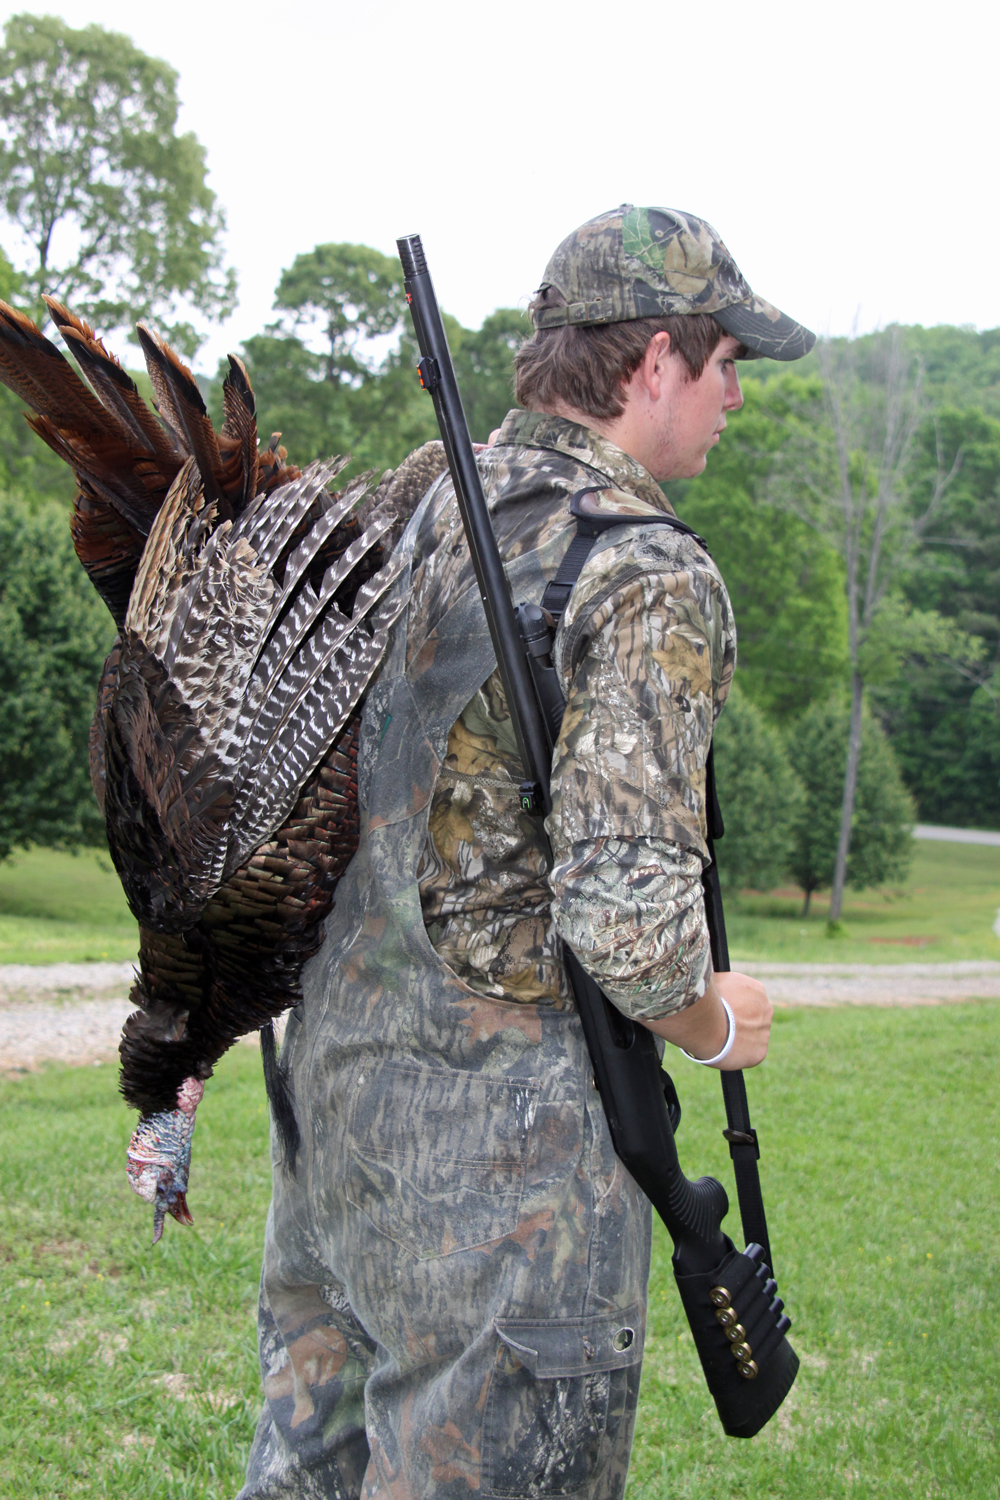 Late season turkey hunting tips.